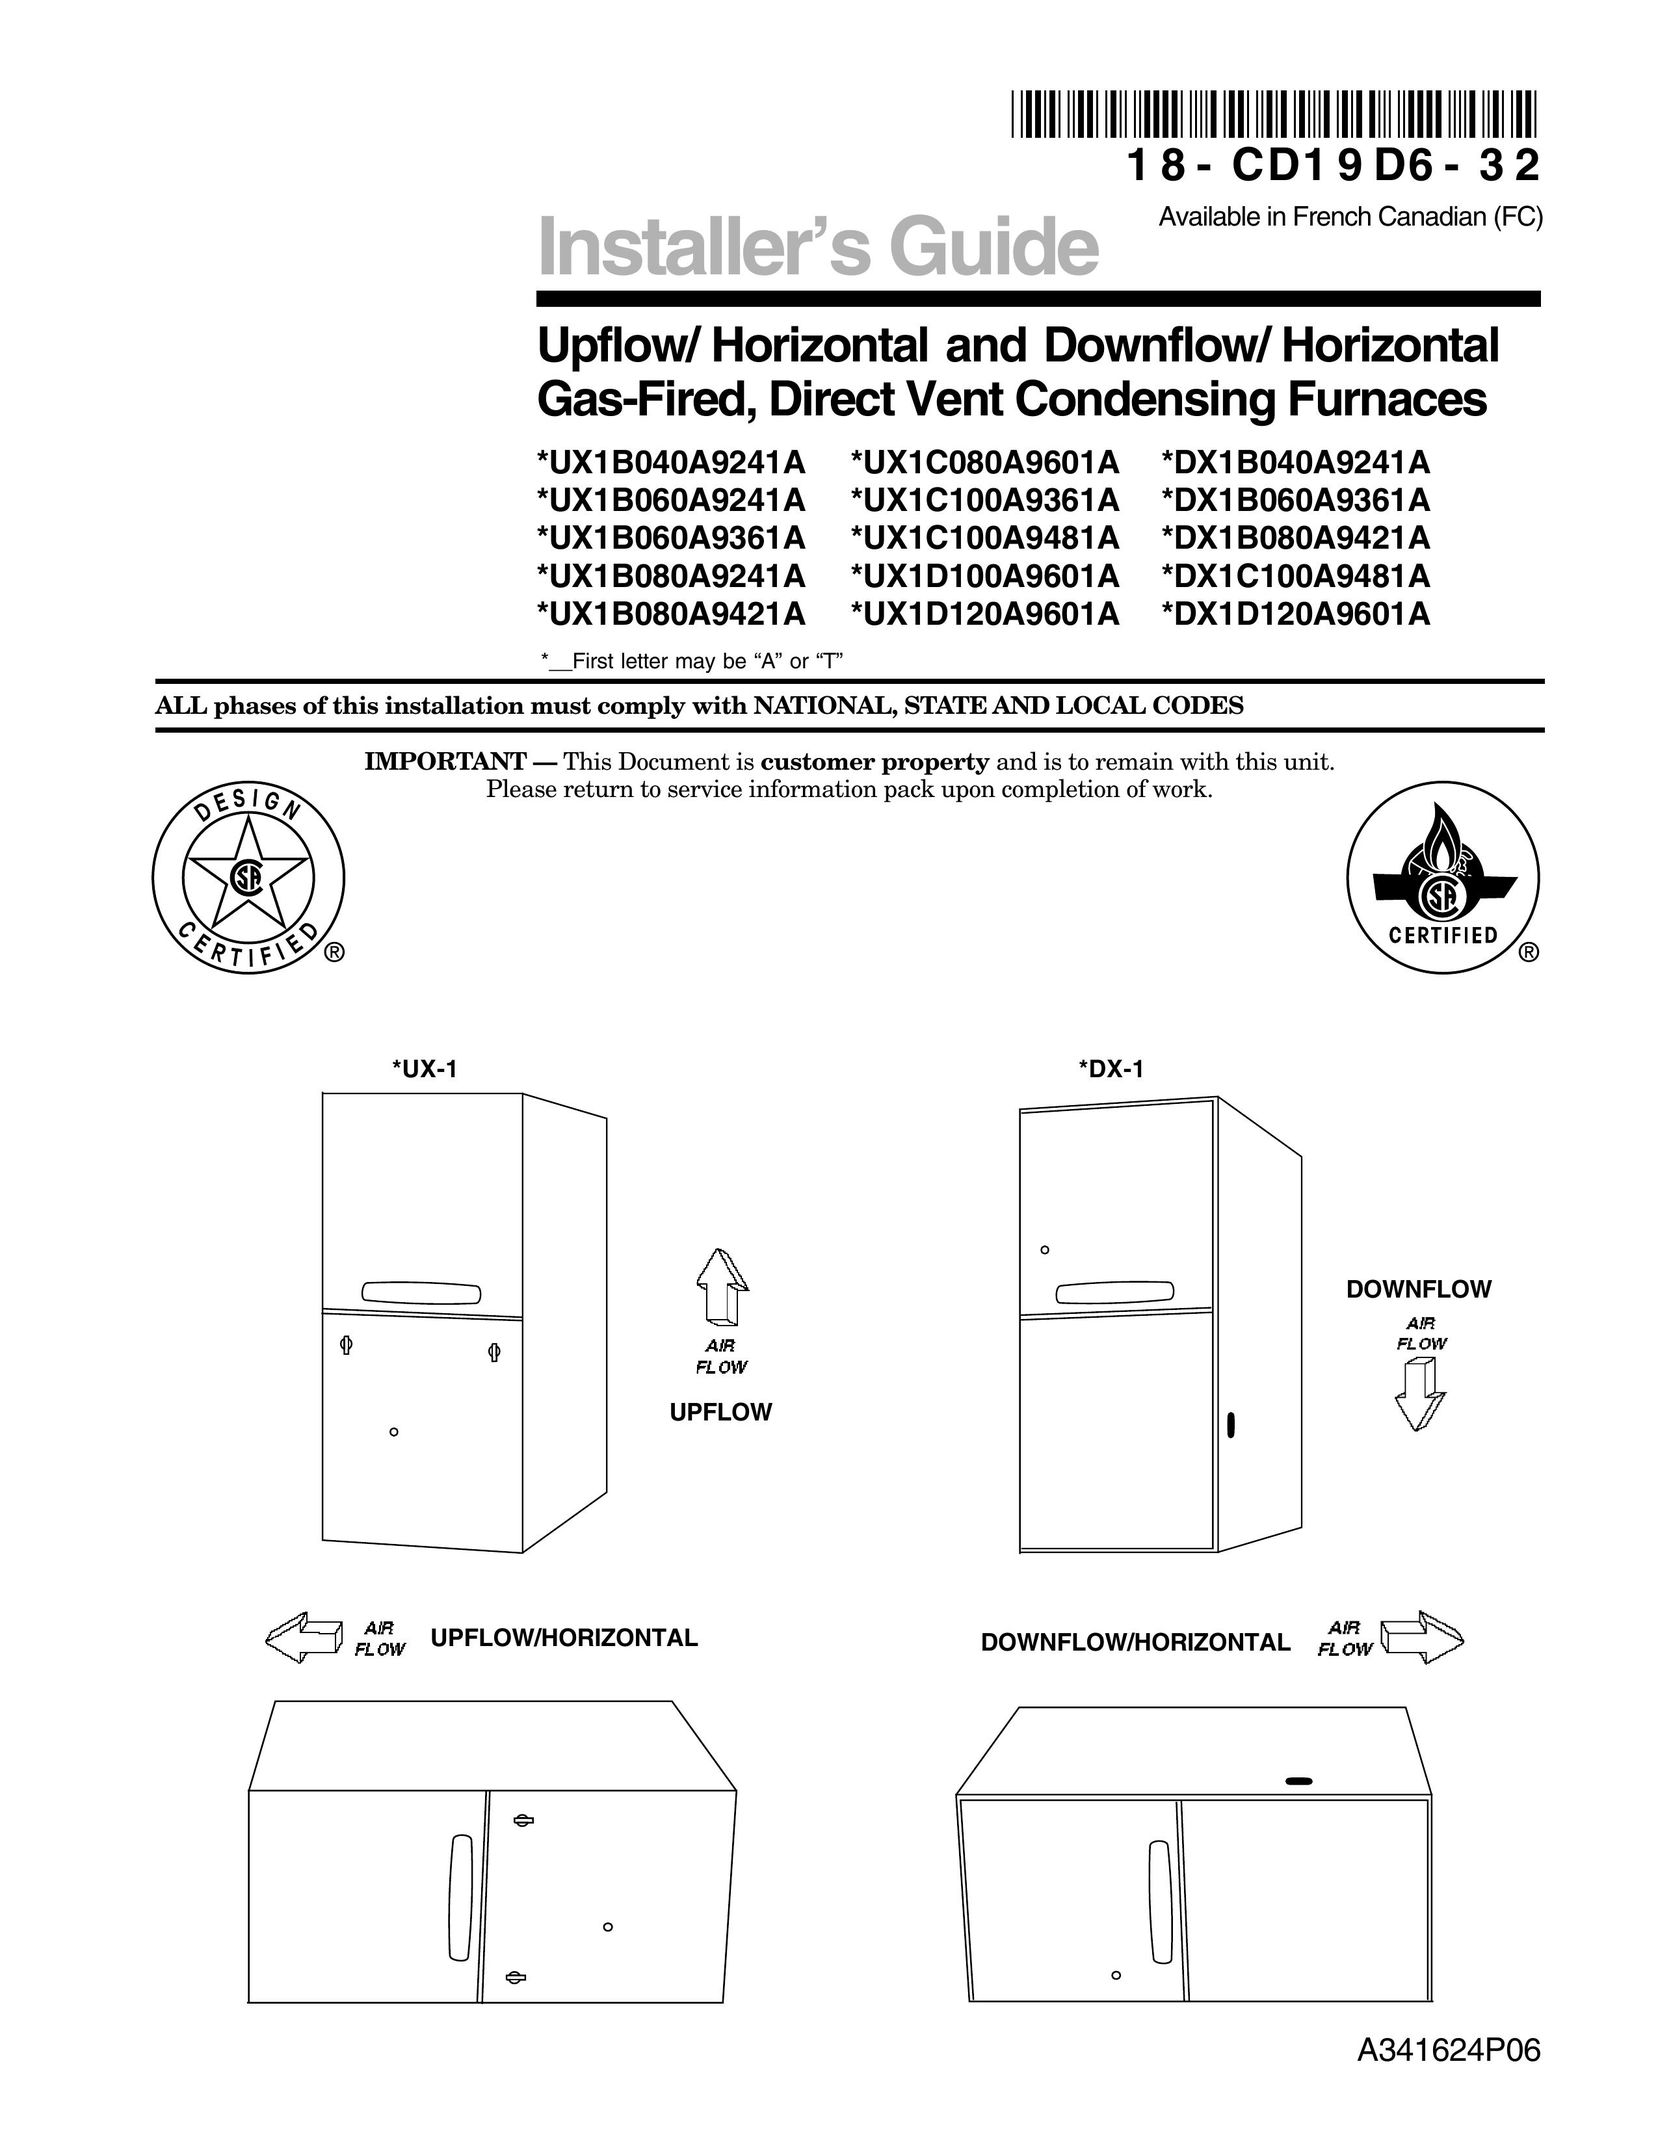 Trane UX1B080A9241A Furnace User Manual